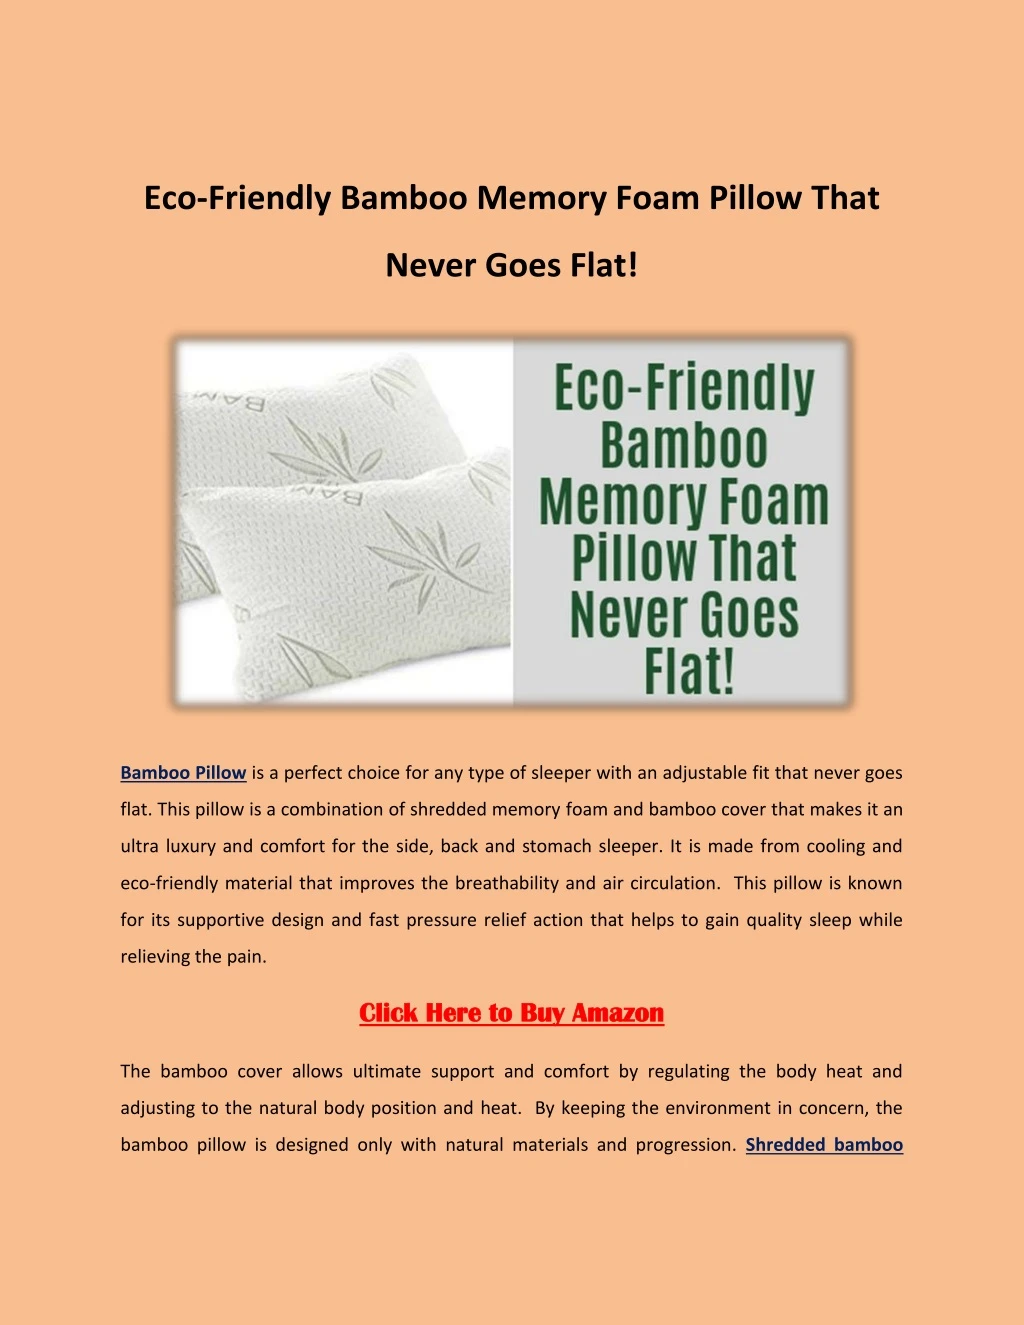 eco friendly bamboo memory foam pillow that